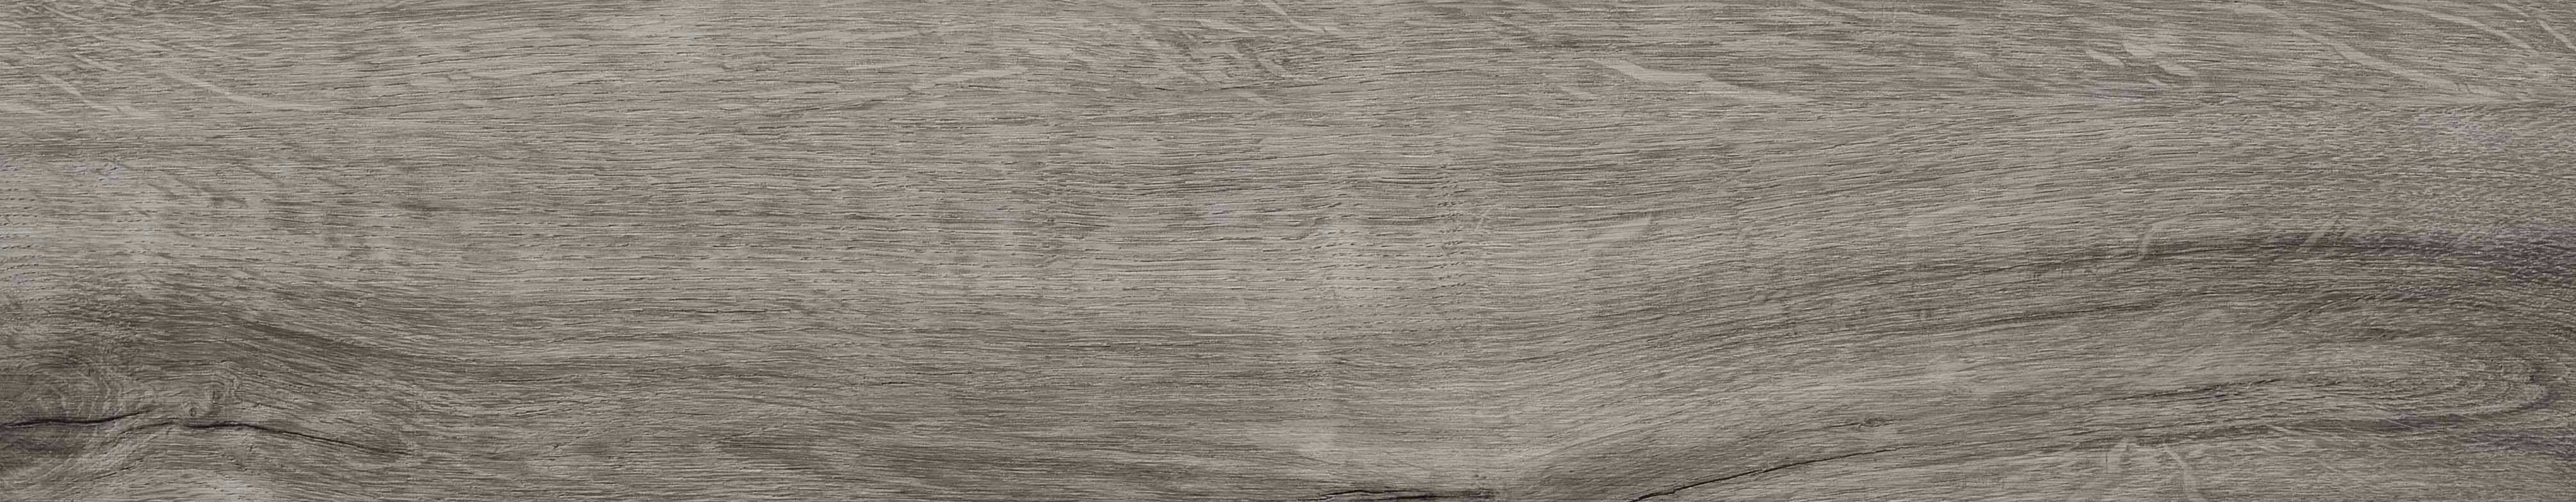 Novocore Herringbone Warm Grey Luxury Vinyl Tile Flooring with Built-In Underlay - Sample